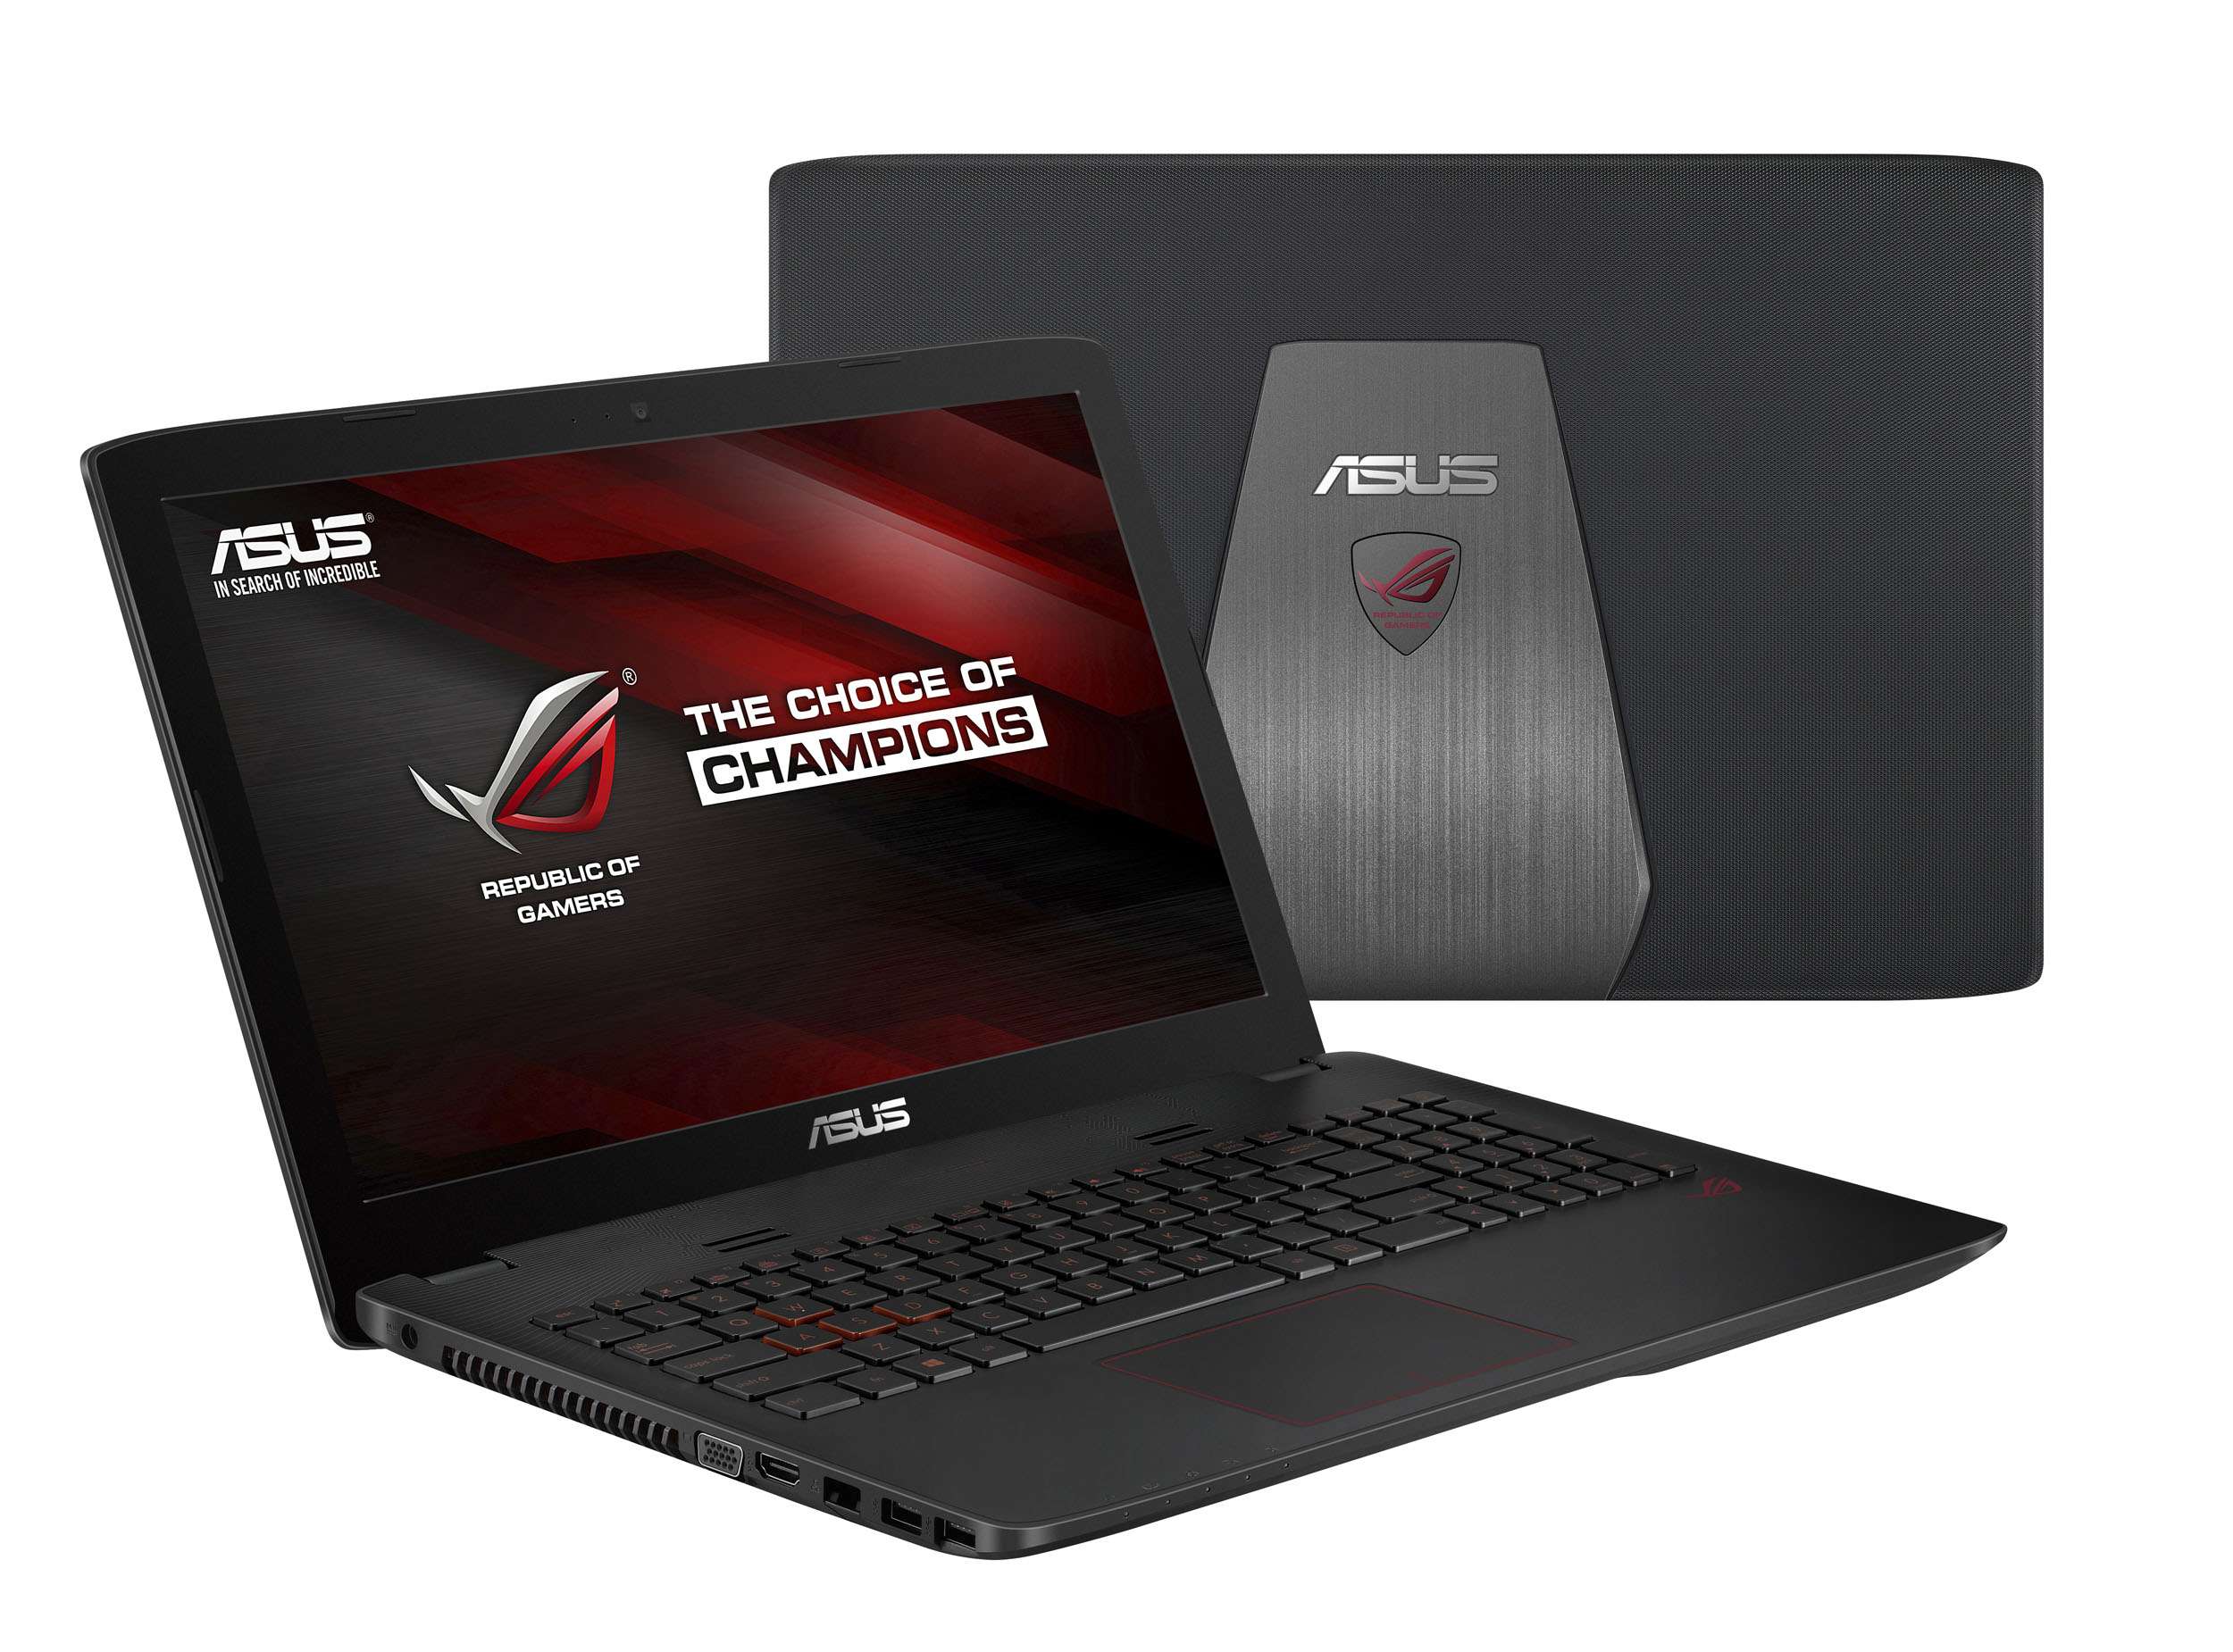 Laptop Gaming Asus GL552VX Coi5 6300HQ/ Ram 8G/ HDD 1T/VGA Geforce GTX 950M/Màn 15.6FHD